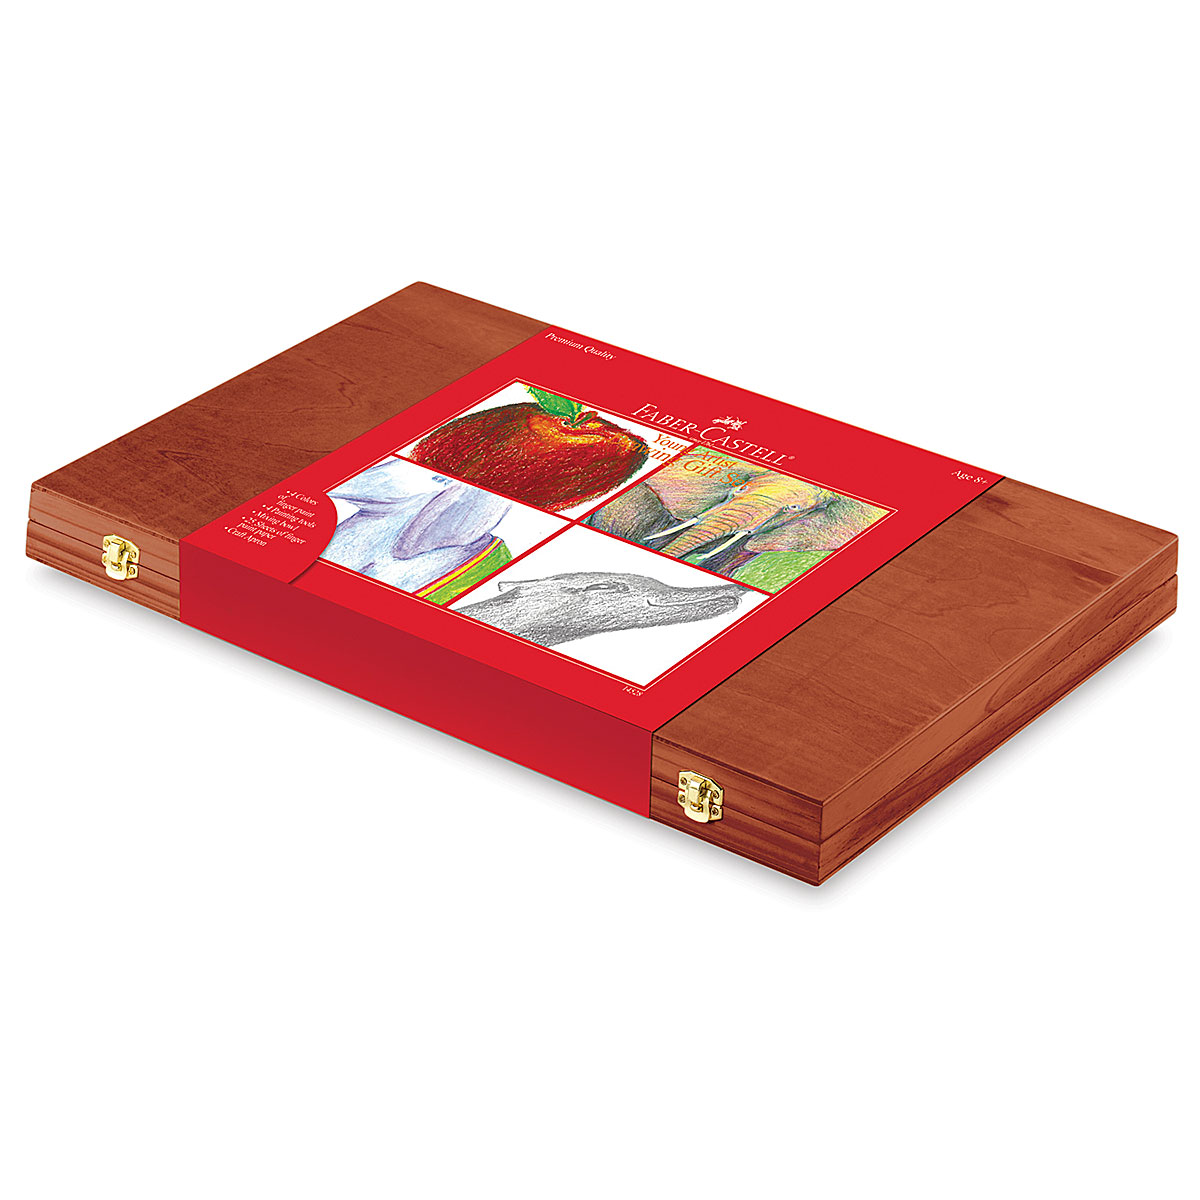  Faber-Castell Young Artist Essentials Gift Set - 64